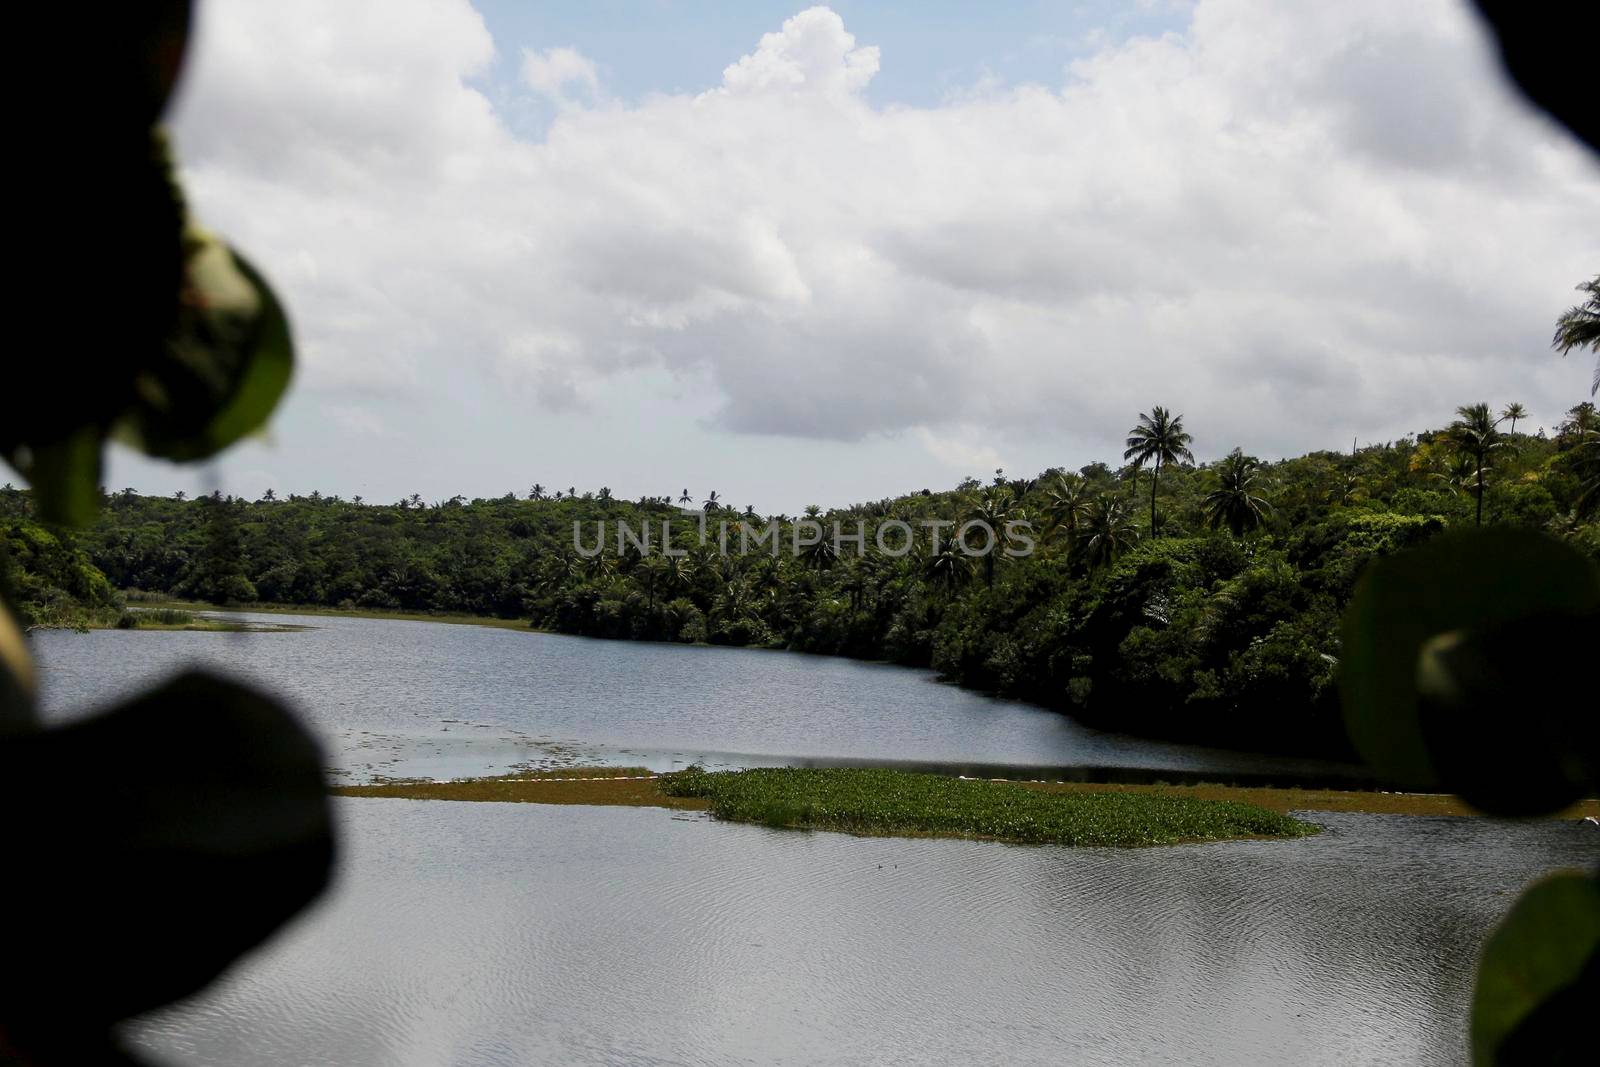 Salvador, Bahia / Brazil - April 24, 2014: view of the Pituacu Lagoon, located in the Metropolitan Park of Pituacu in Salvador.

